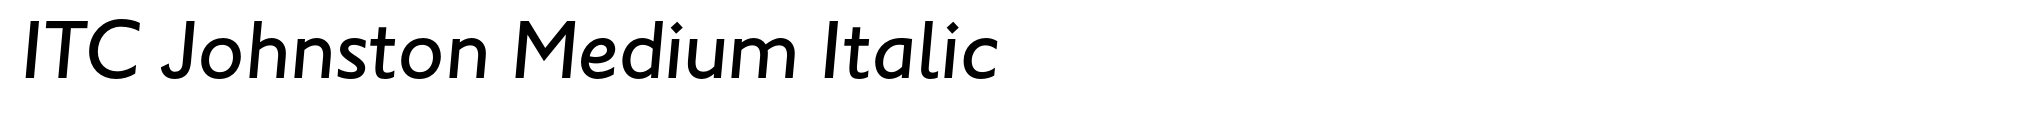 ITC Johnston Medium Italic image